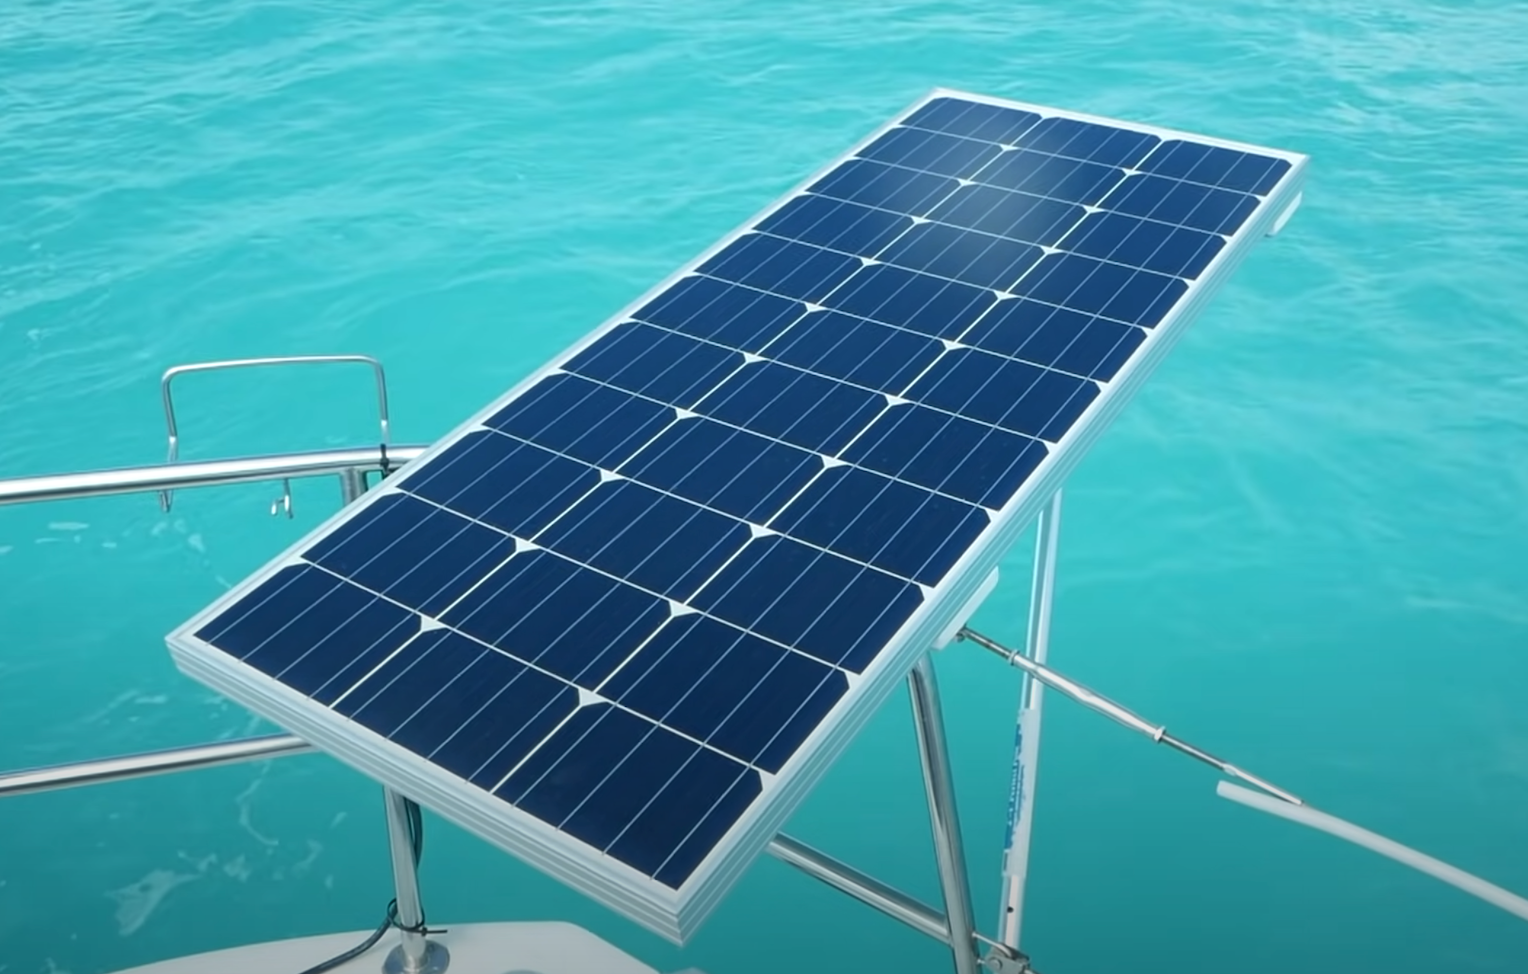 rail-mounted solar panel on a boat, solar panel